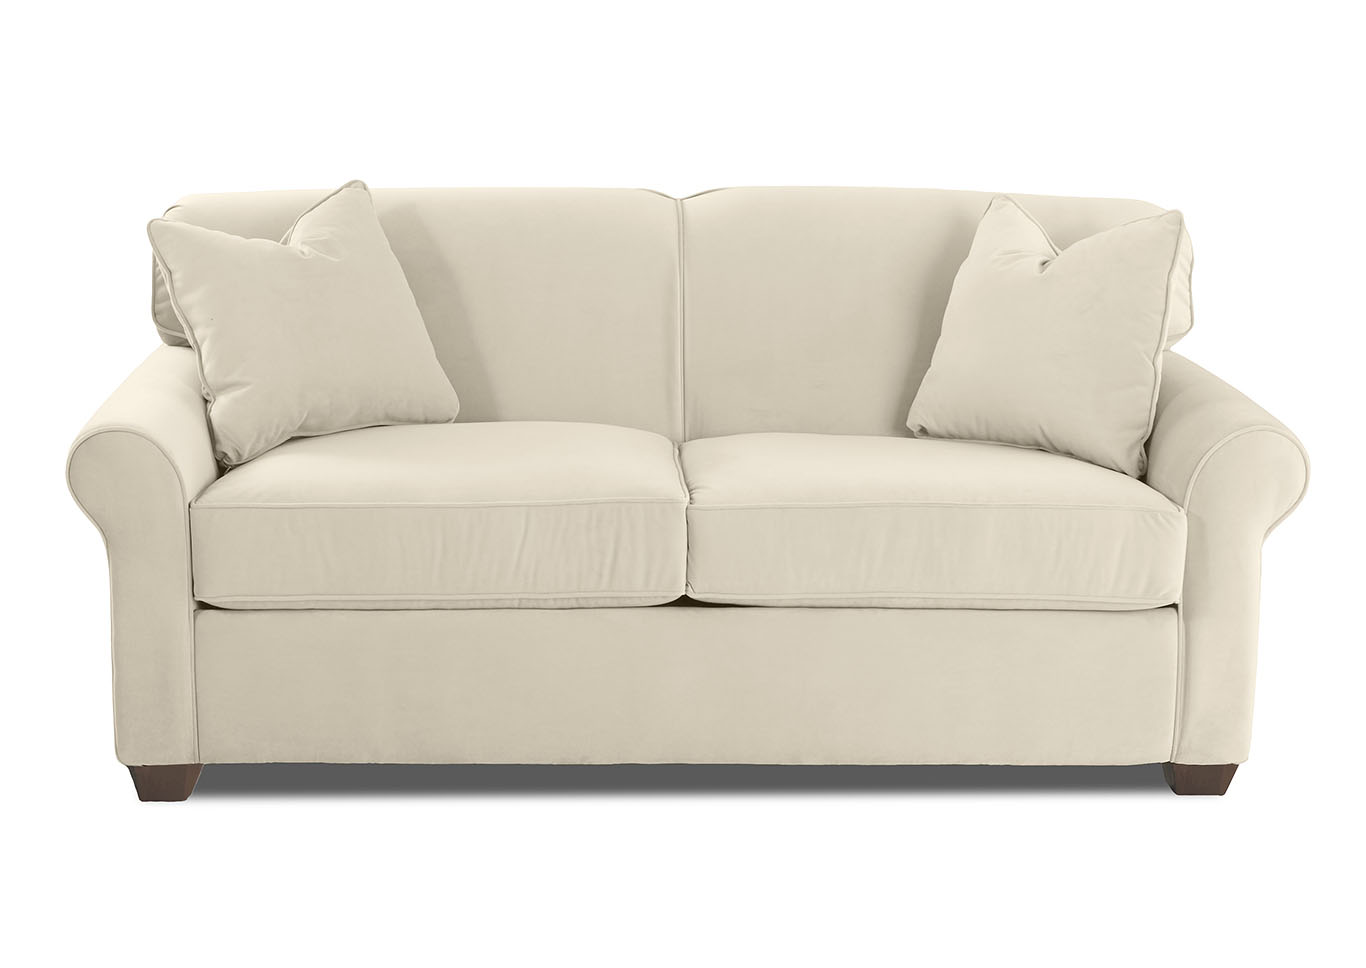 Mayhew White Sleeper Fabric Sofa,Klaussner Home Furnishings